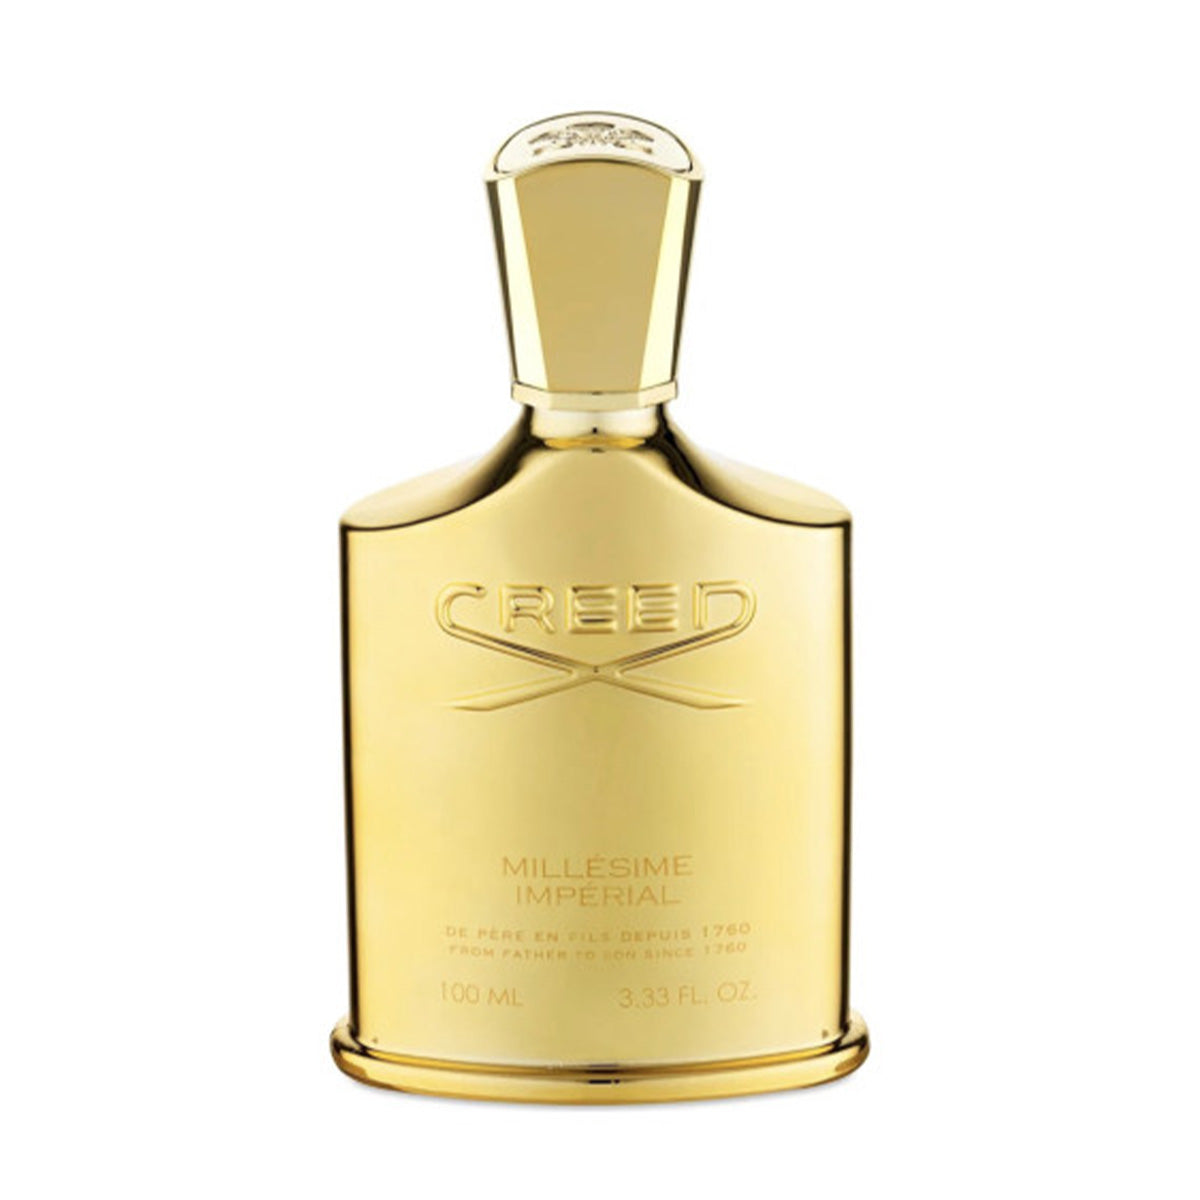 Millesime Imperial Eau de Parfum Spray by Creed 1.7 oz